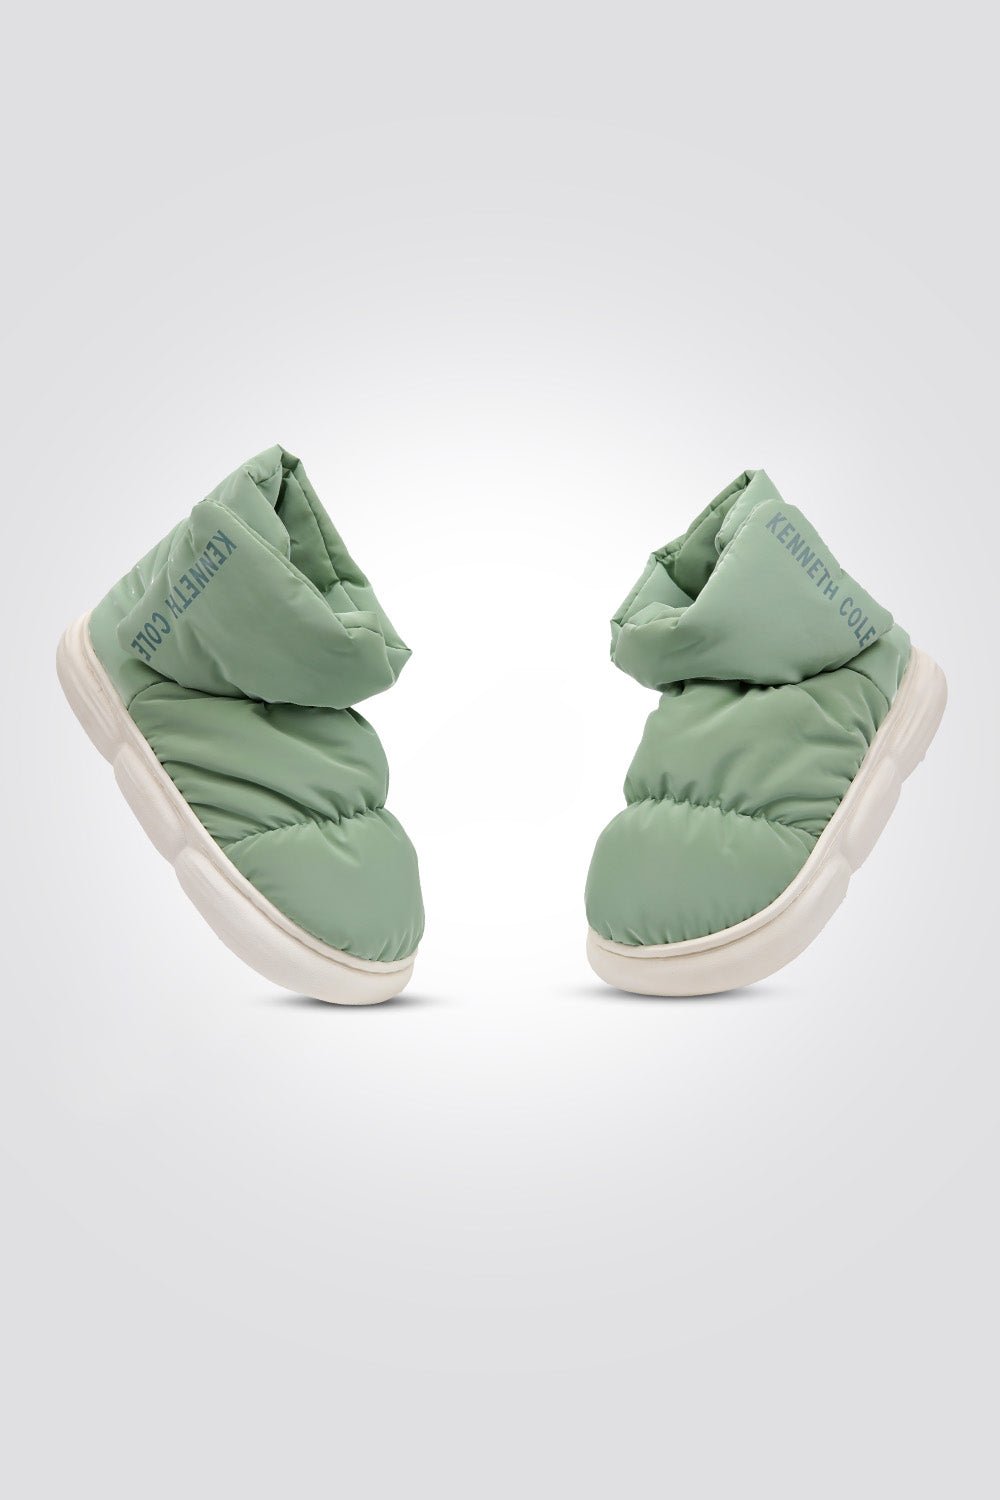 KENNETH COLE - נעלי בית גבוהות לנשים בצבע ירוק - MASHBIR//365